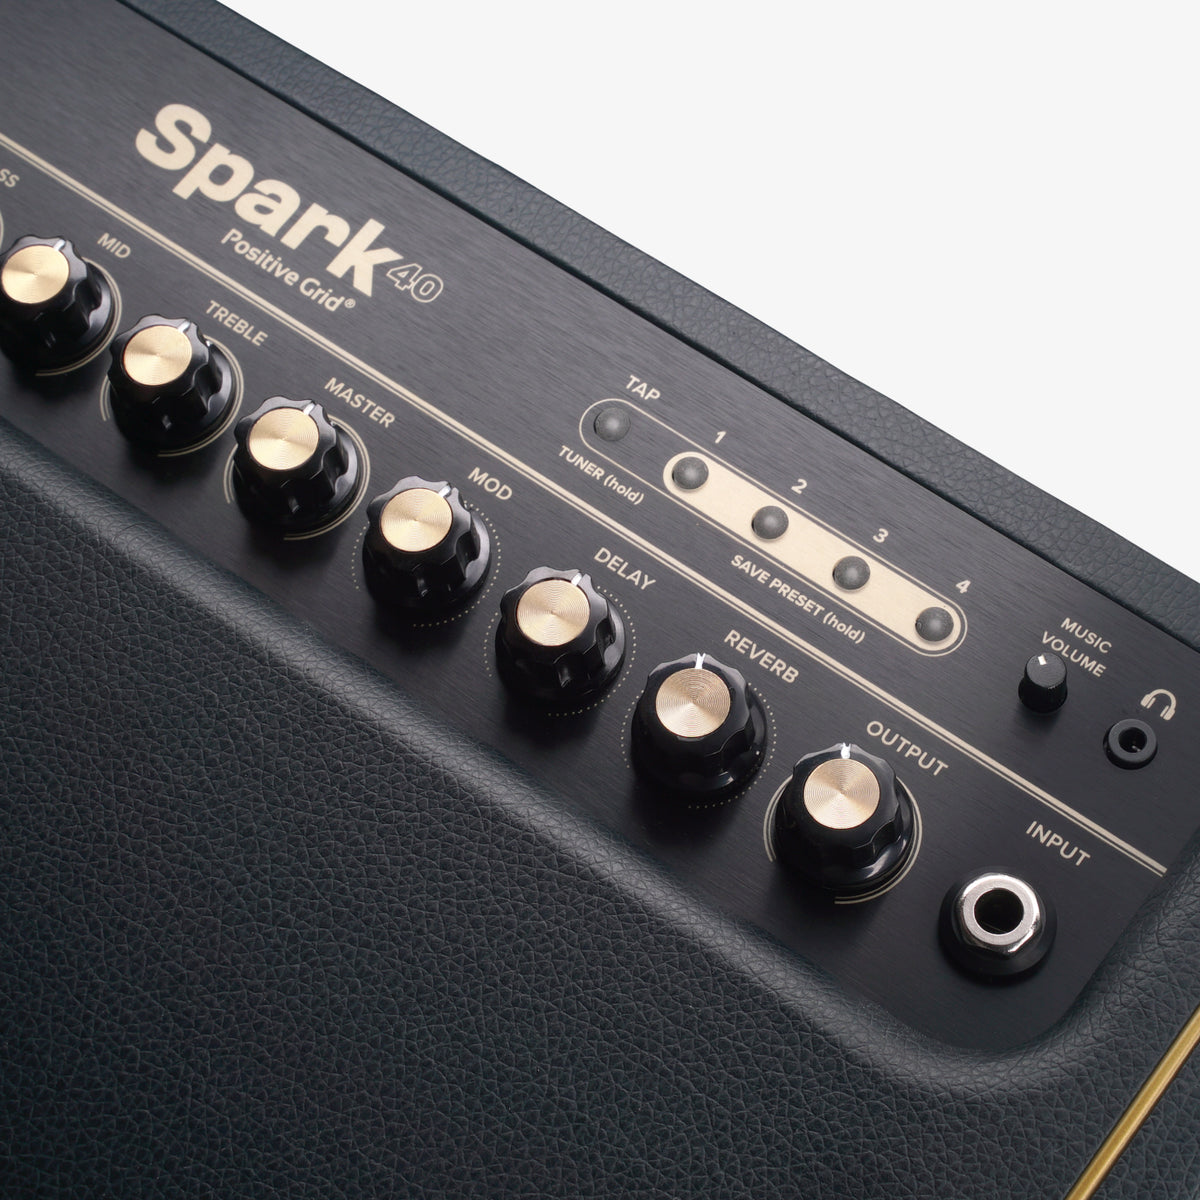 Positive Grid Positive Grid Spark GO Ultra-portable Smart Guitar